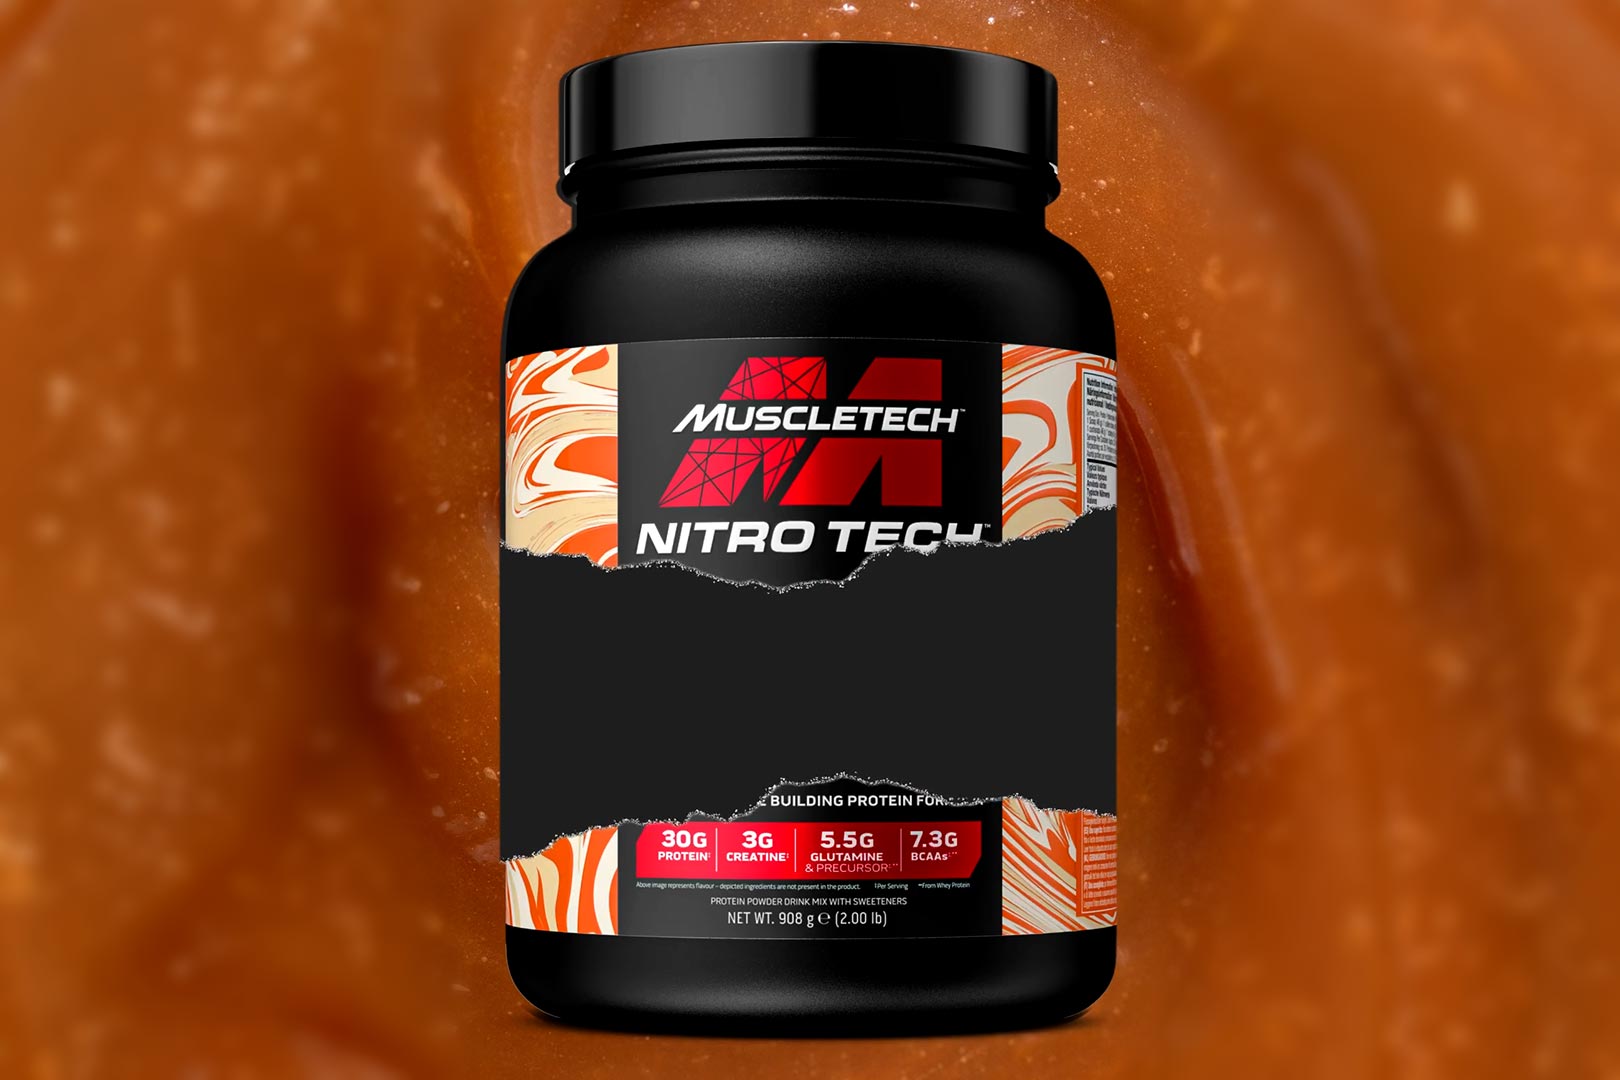 Muscletech teases Special Edition European Nitro Tech Whey Gold